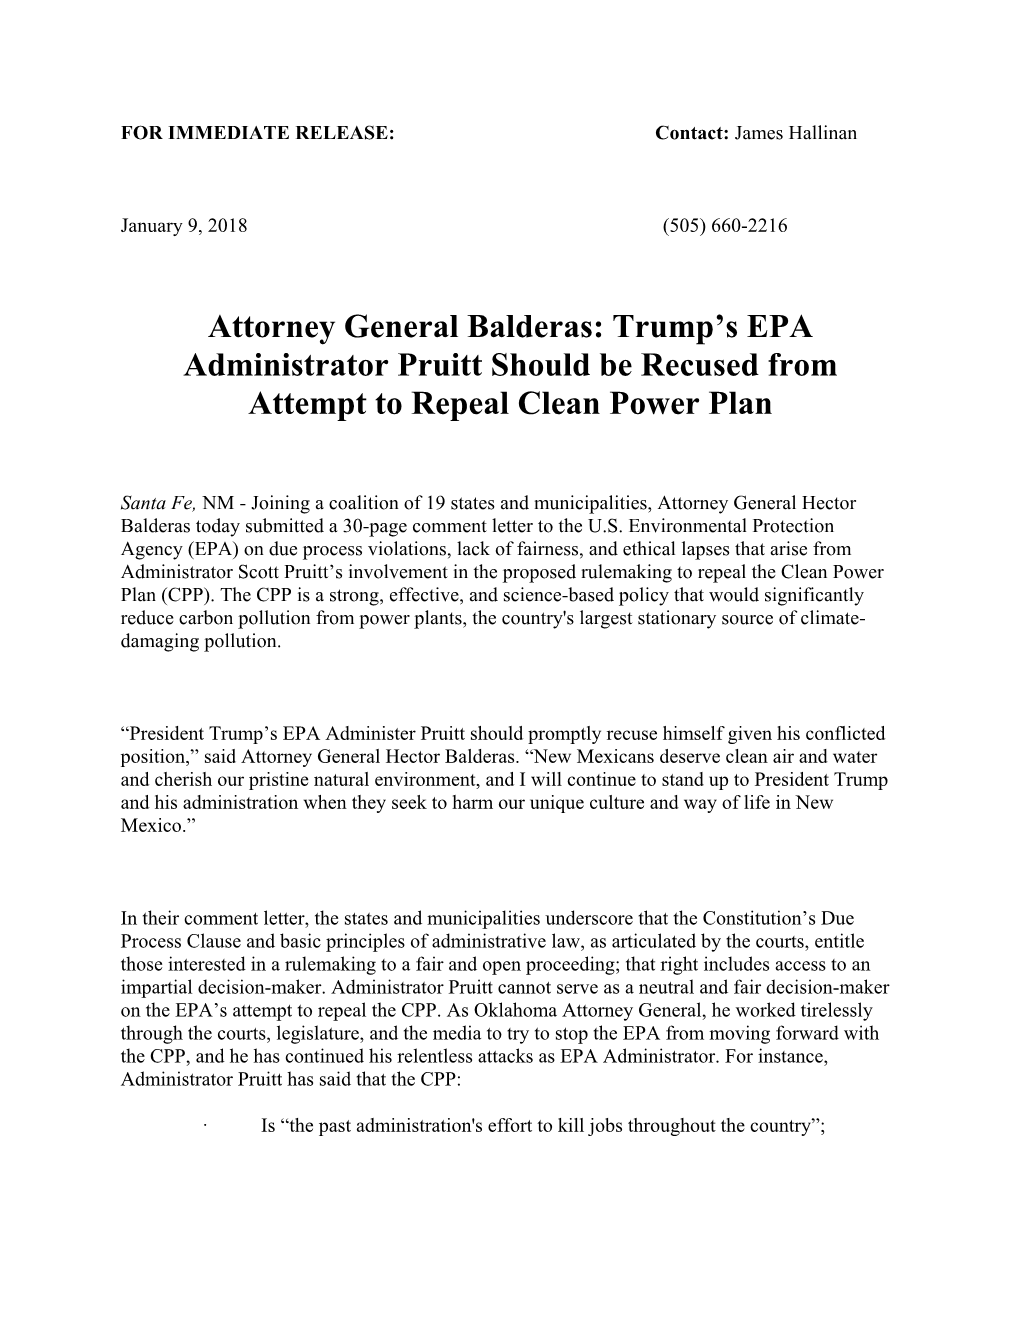 Attorney General Balderas: Trump's EPA Administrator Pruitt Should Be